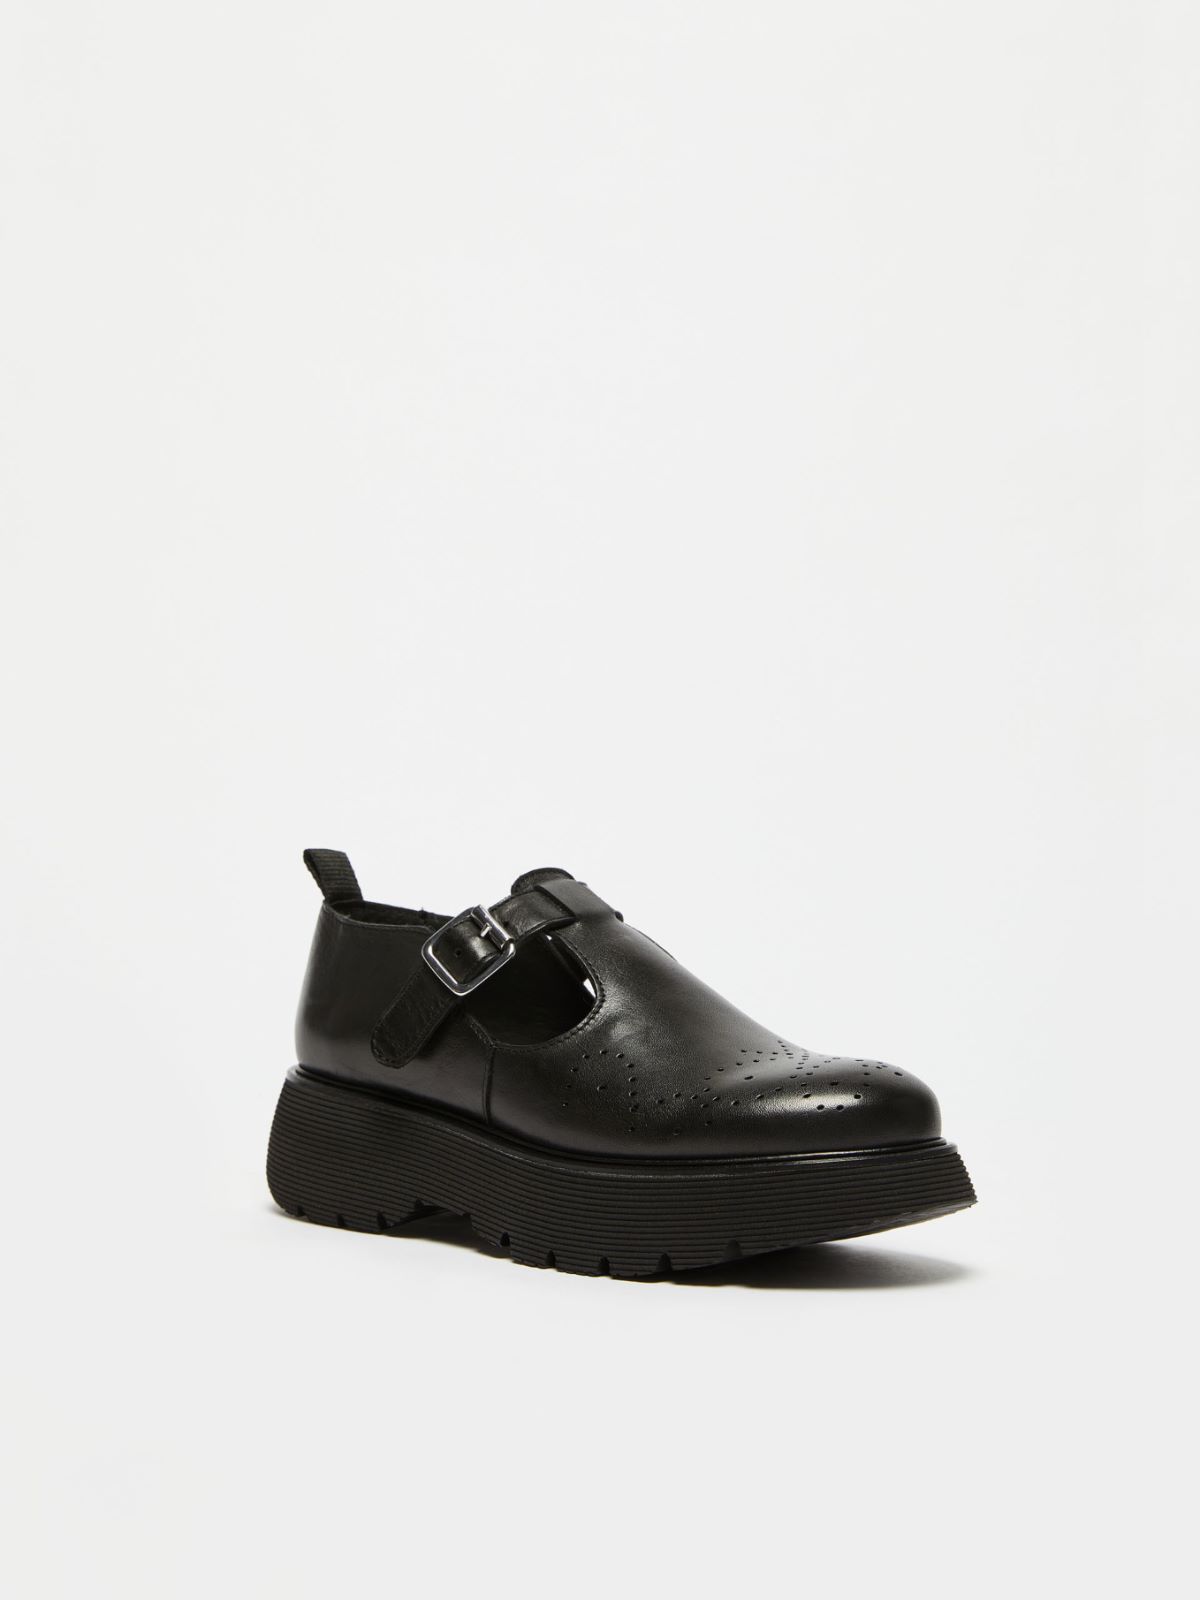 Leather Mary Jane shoes - BLACK - Weekend Max Mara - 2